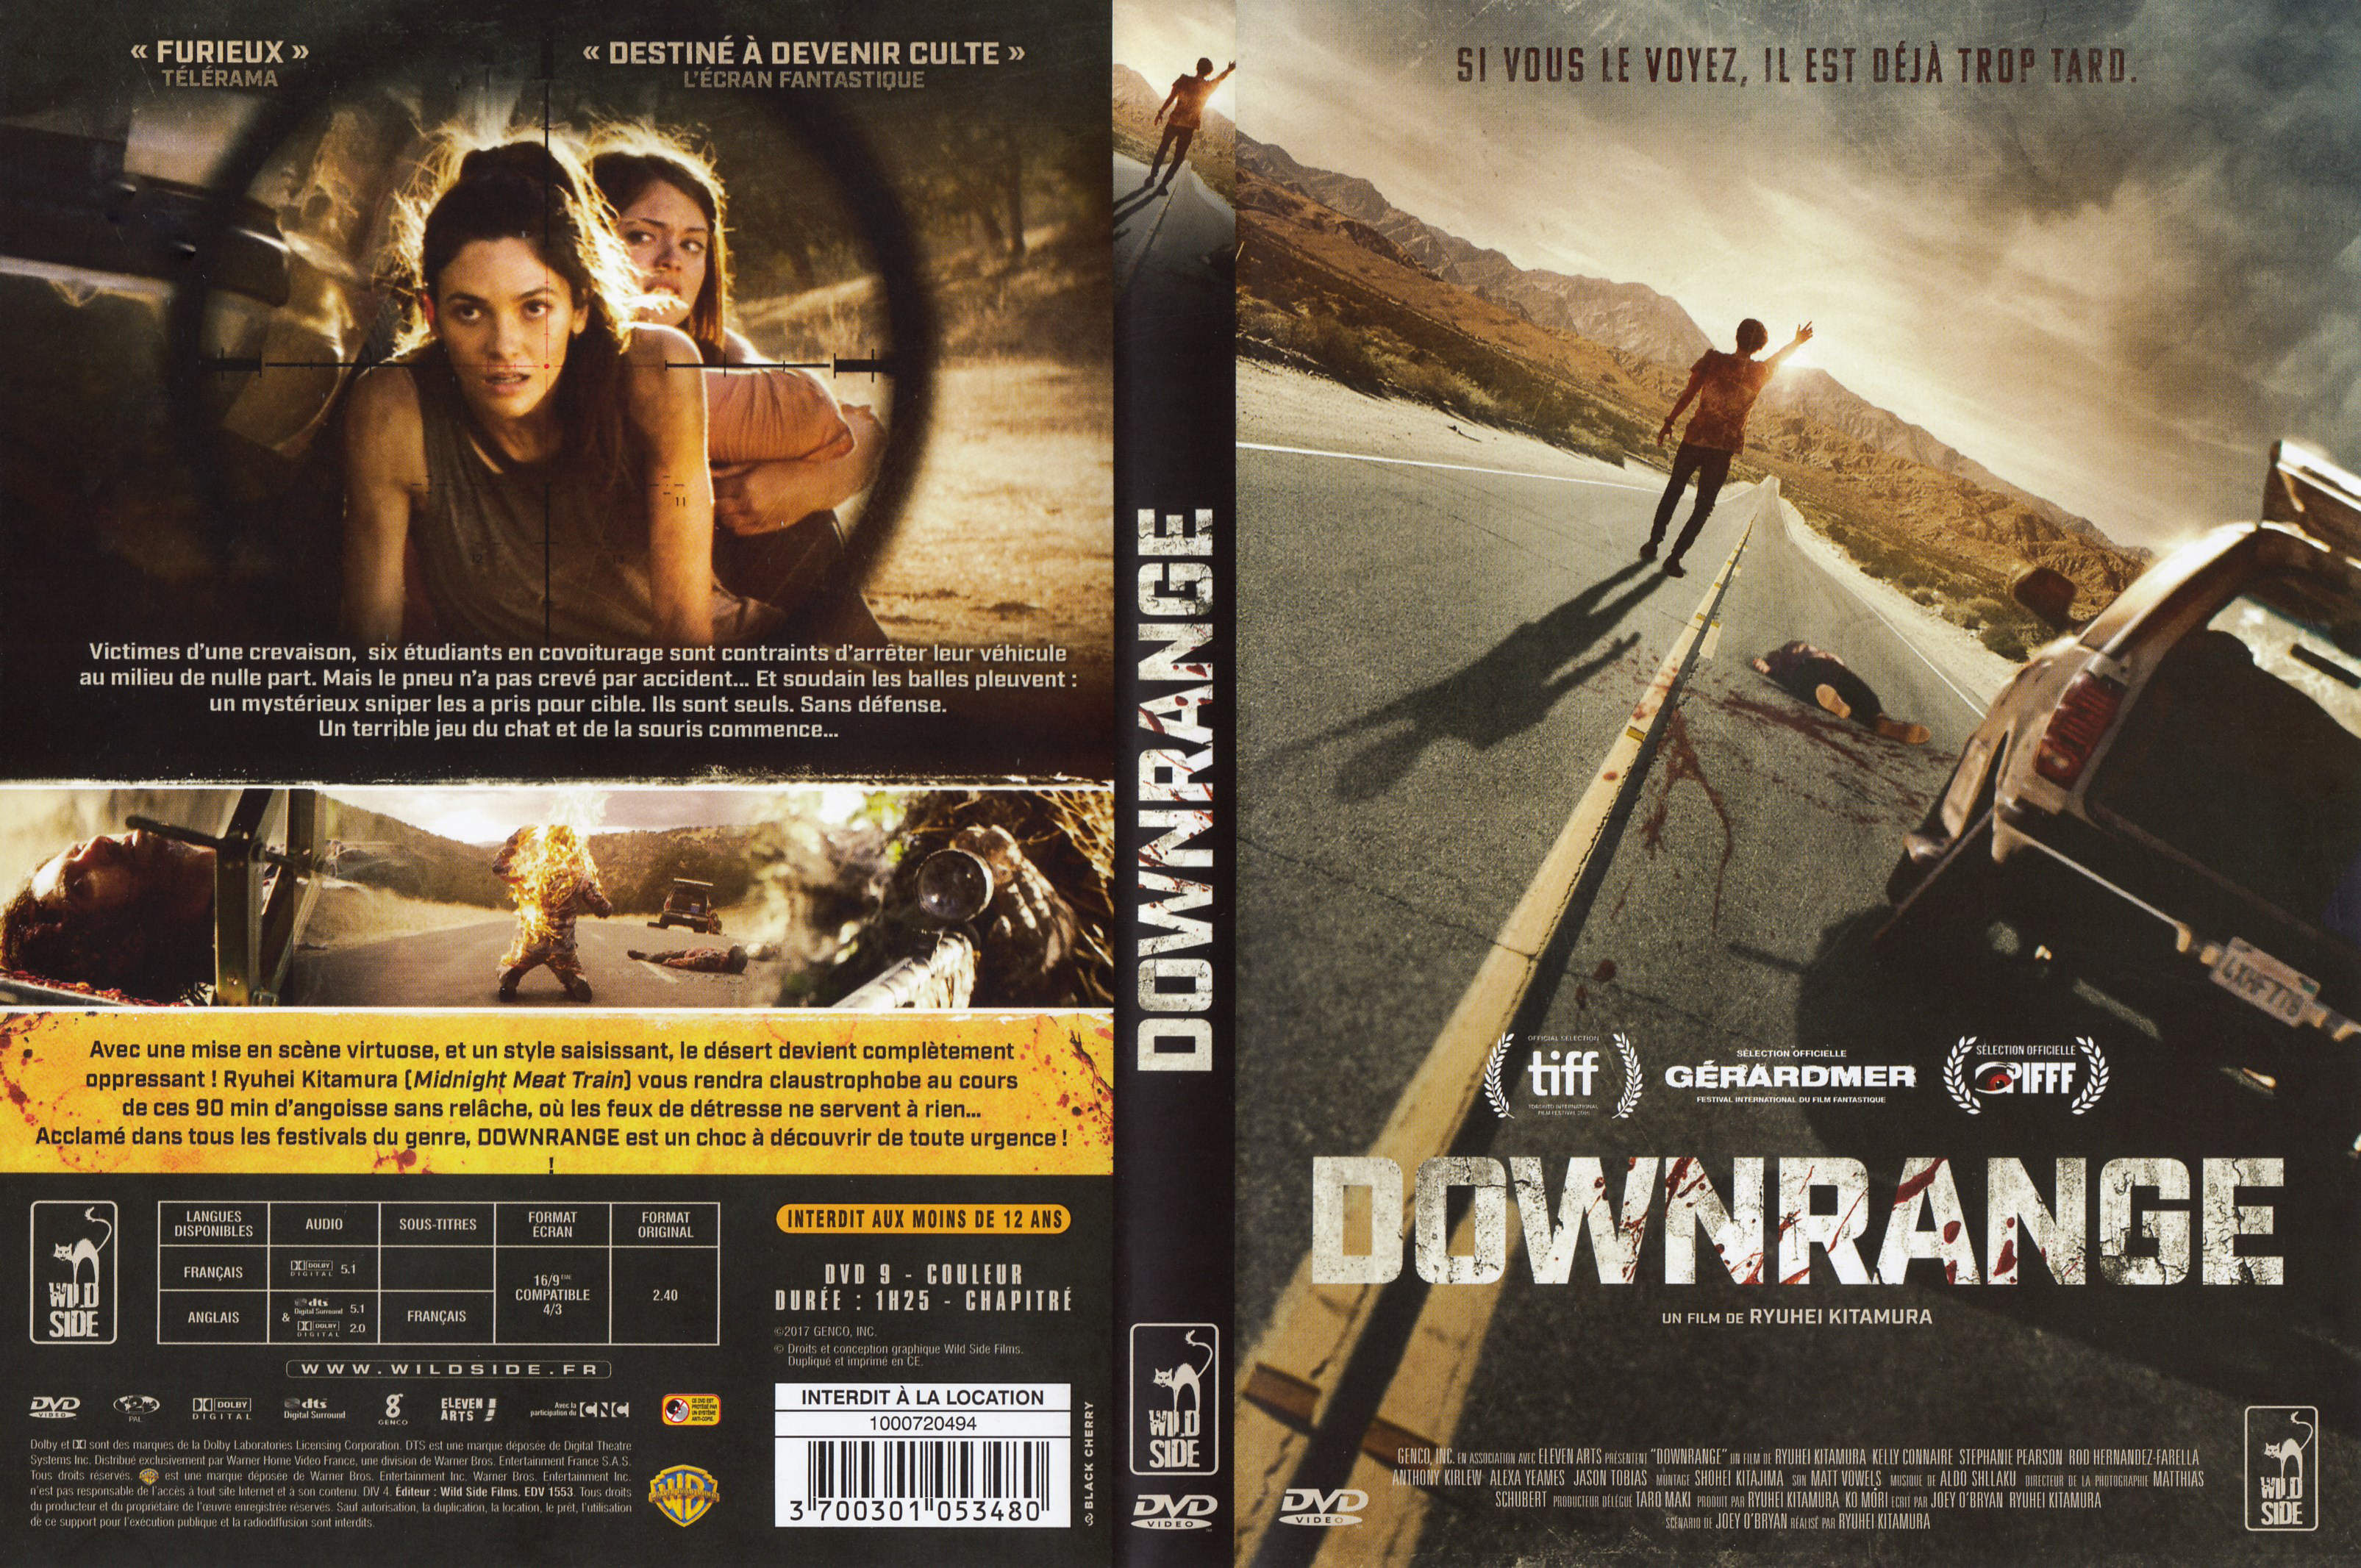 Jaquette DVD Downrange